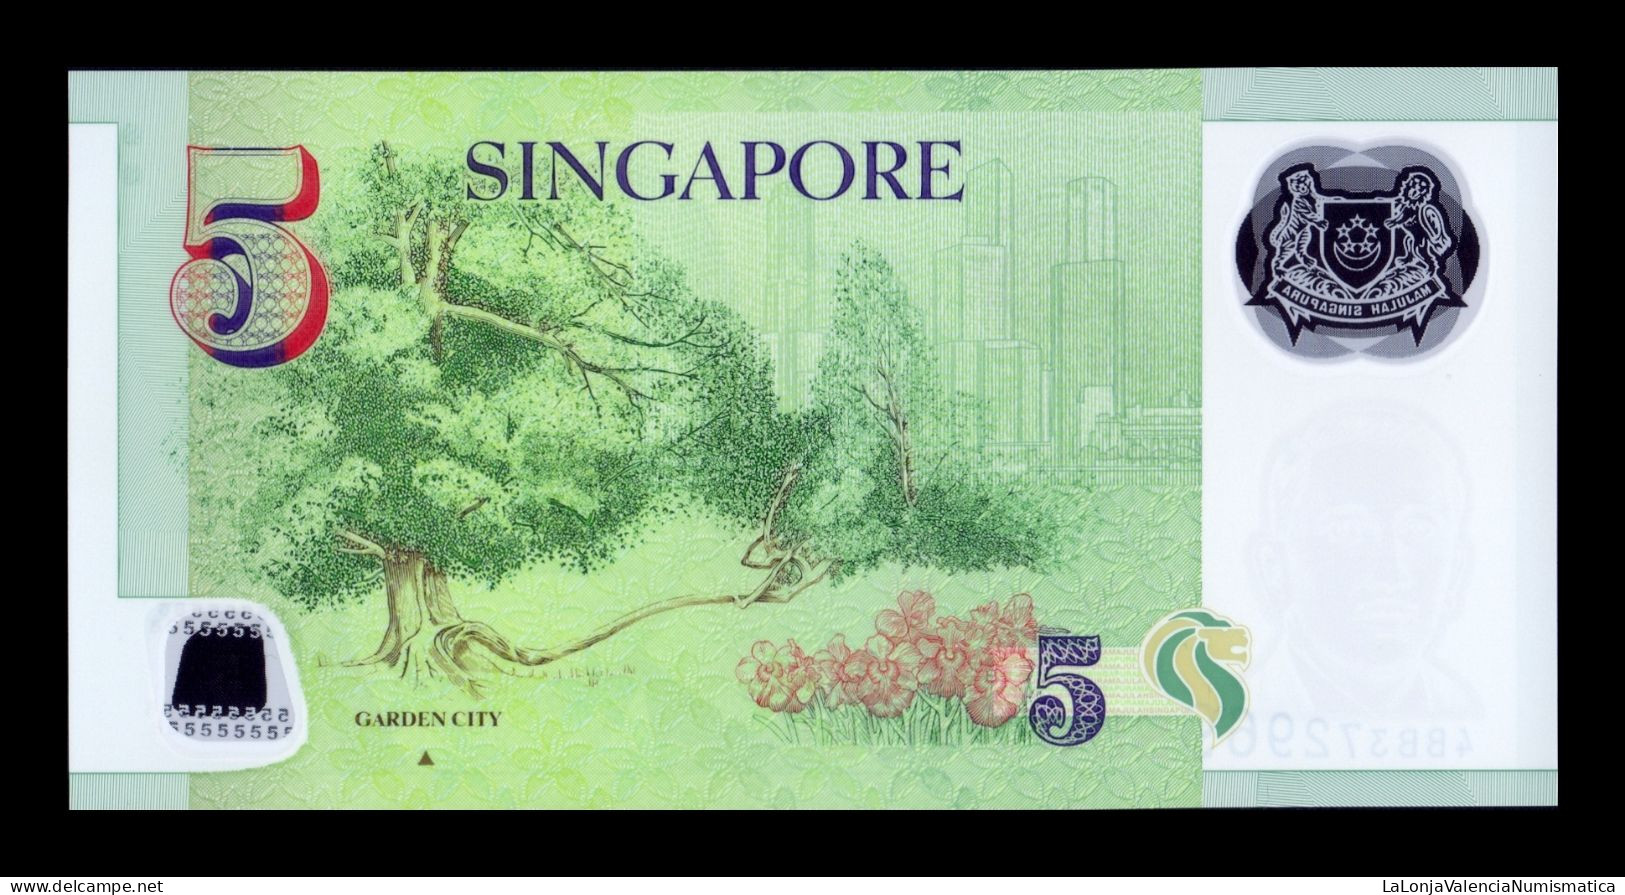 Singapur Singapore 5 Dollars 2014 Pick 47d Polymer Sc Unc - Singapore